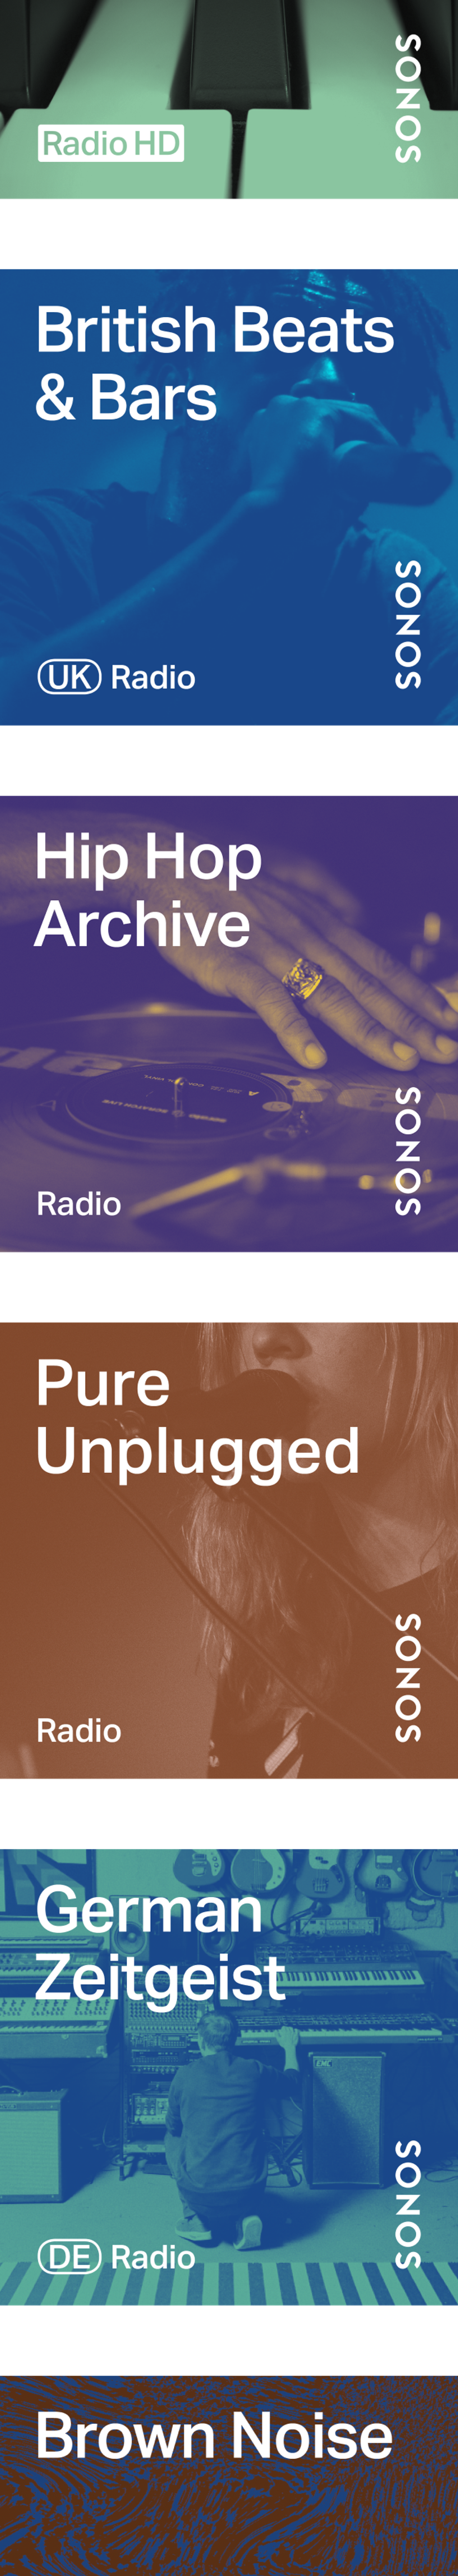 Sonos Radio-stations